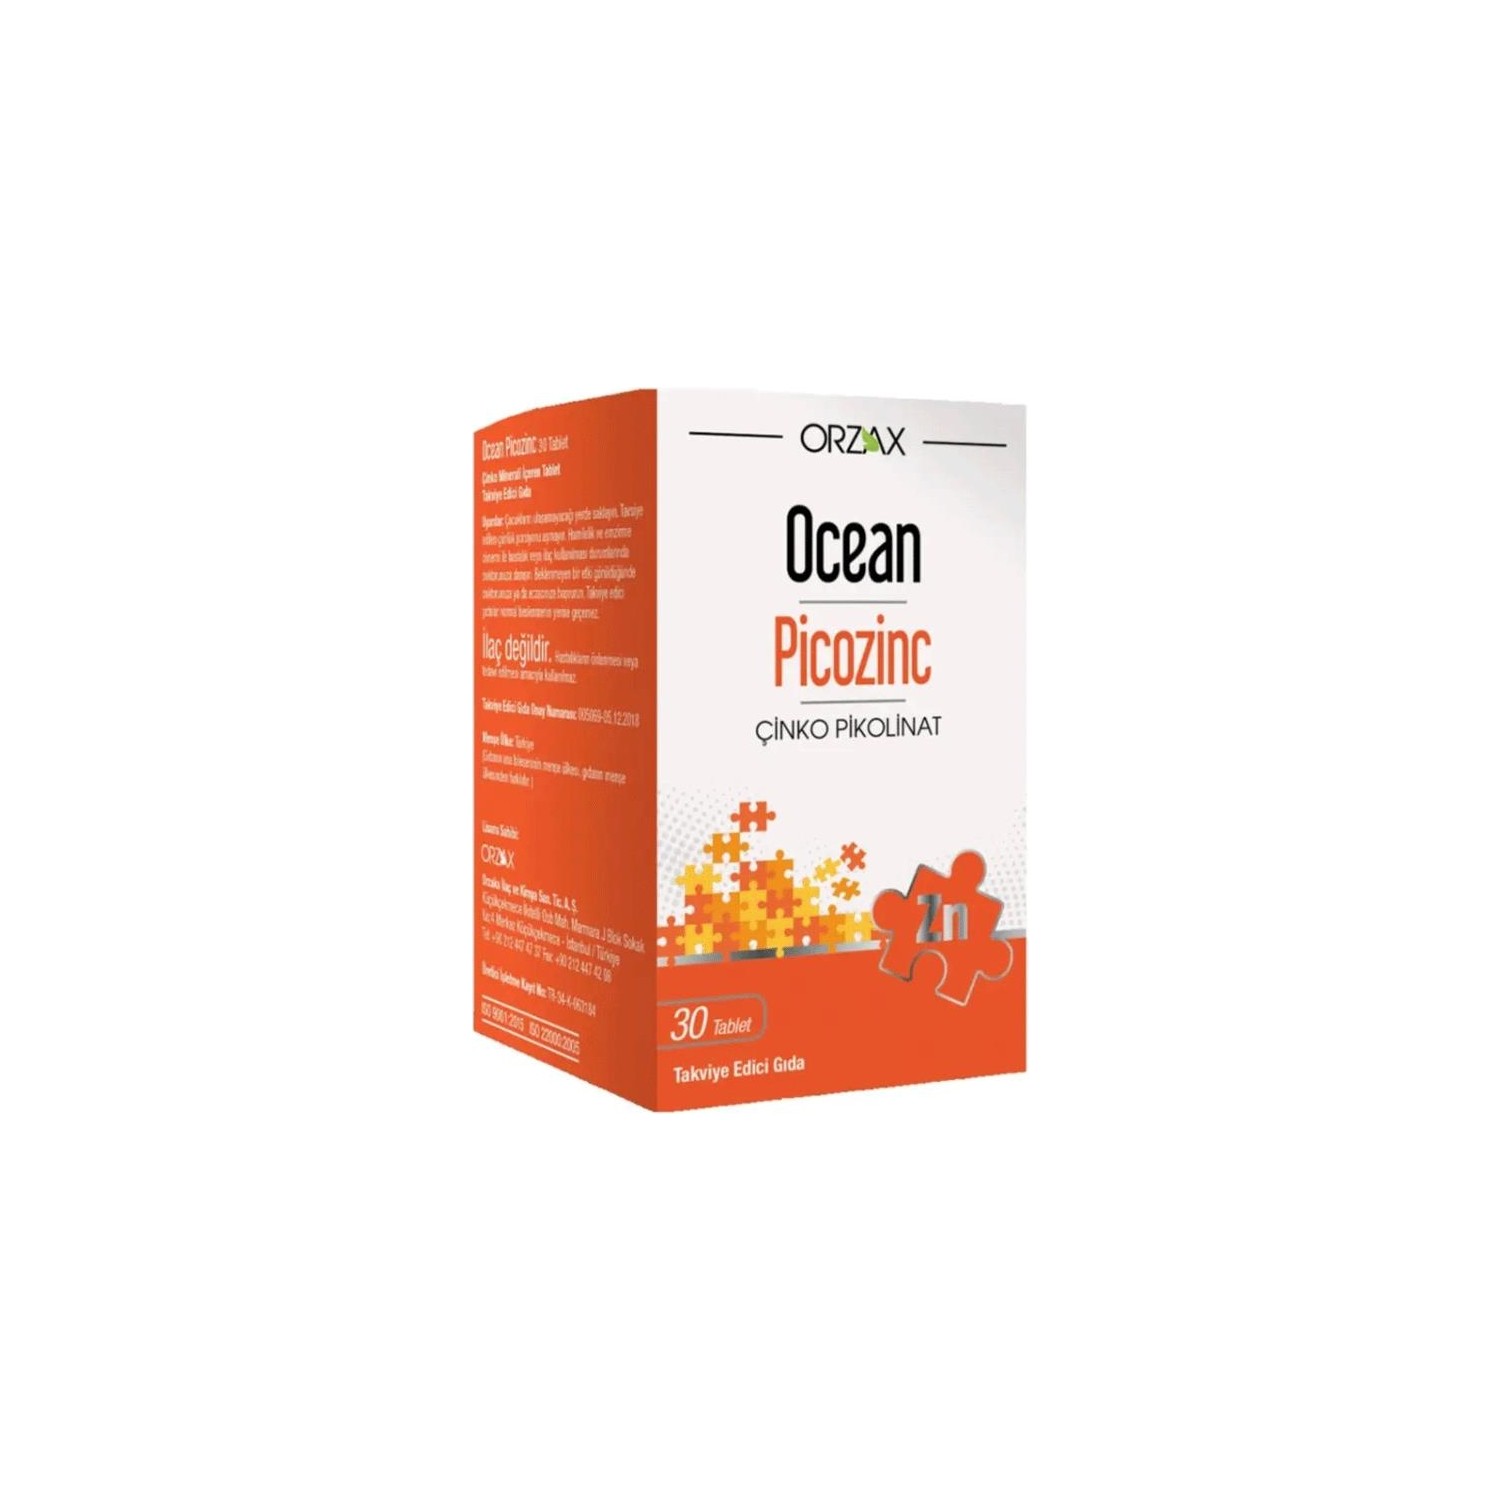 пищевая добавка orzax ocean picozinc supplementary food 3 упаковки по 30 капсул Пищевая добавка Orzax Ocean Picozinc Supplementary Food, 30 капсул